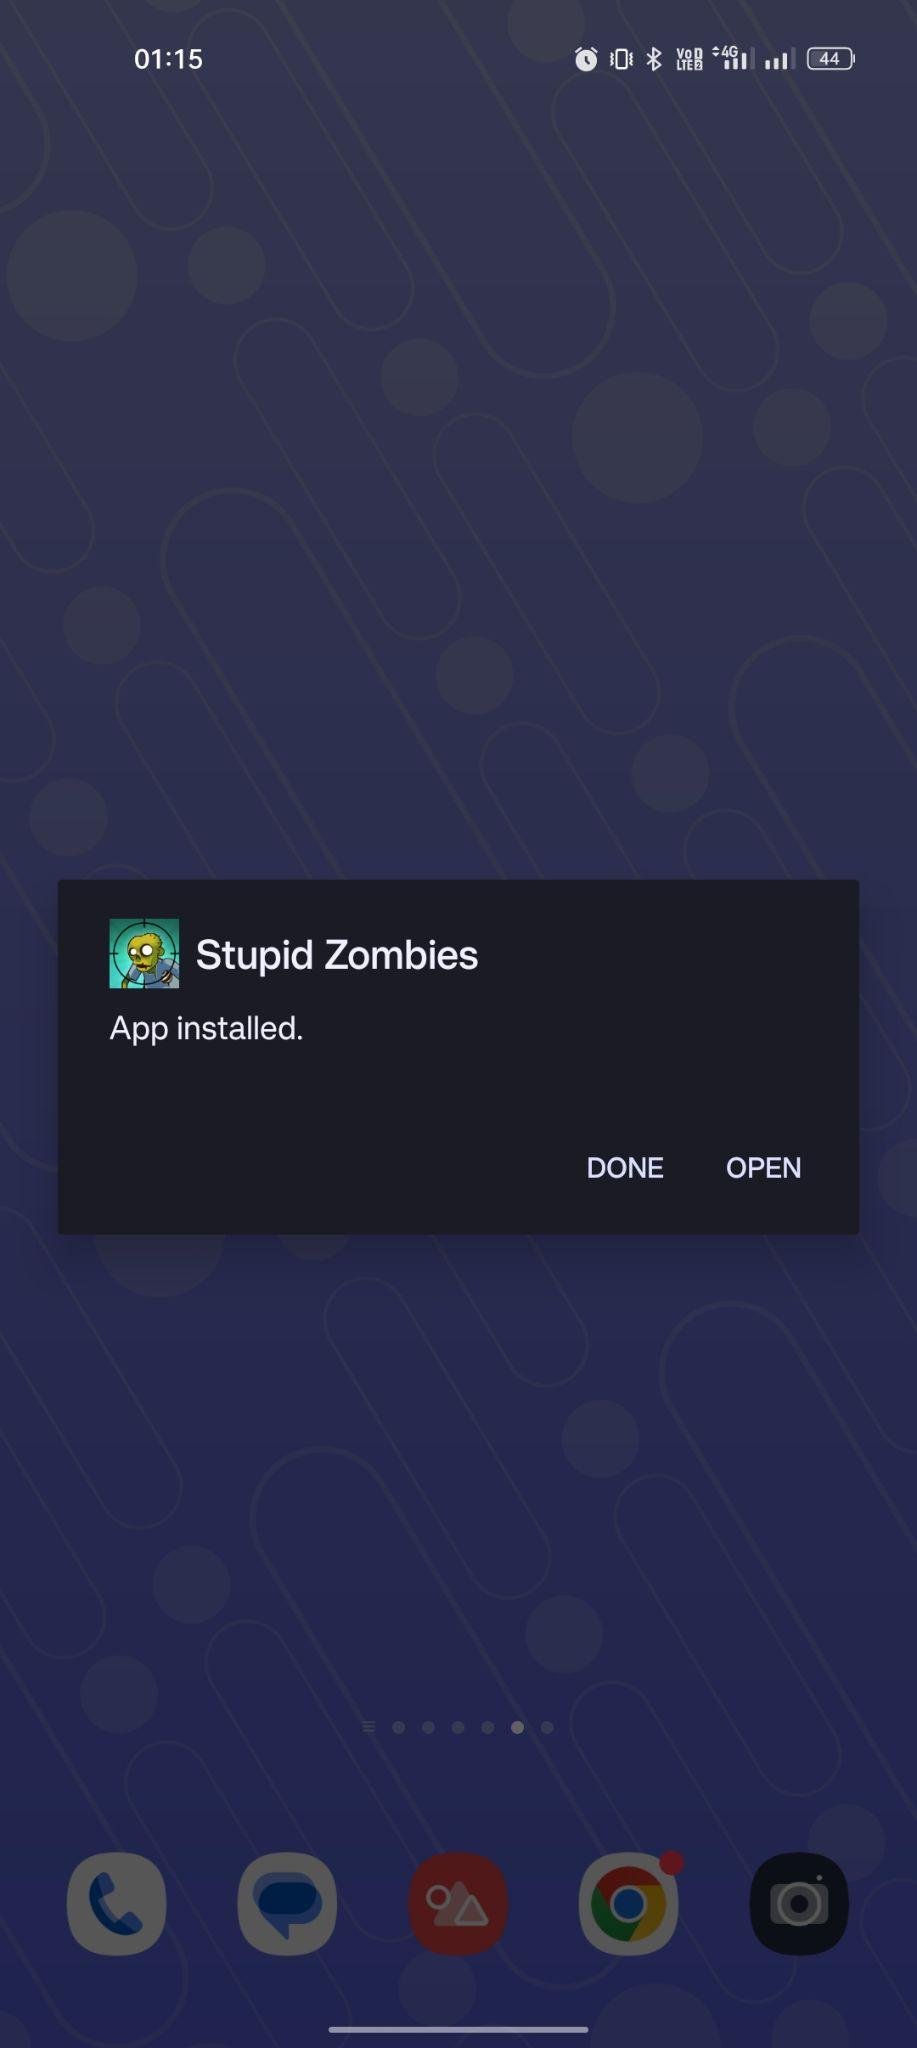 Stupid Zombies apk installed